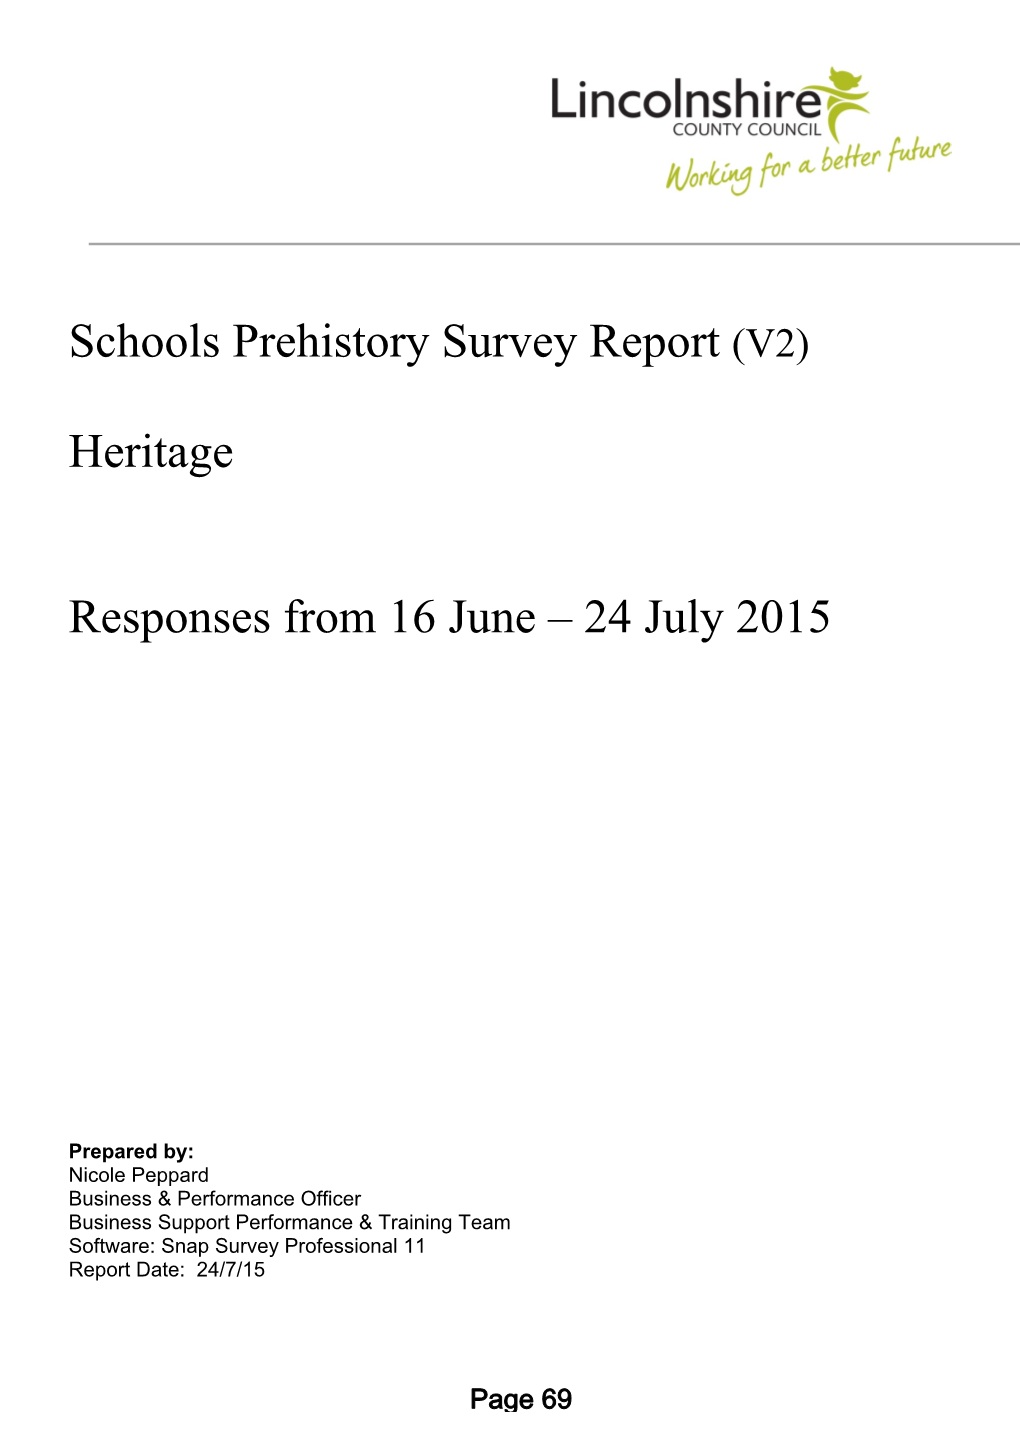 Schools Prehistory Survey Report (V2) Heritage Responses from 16